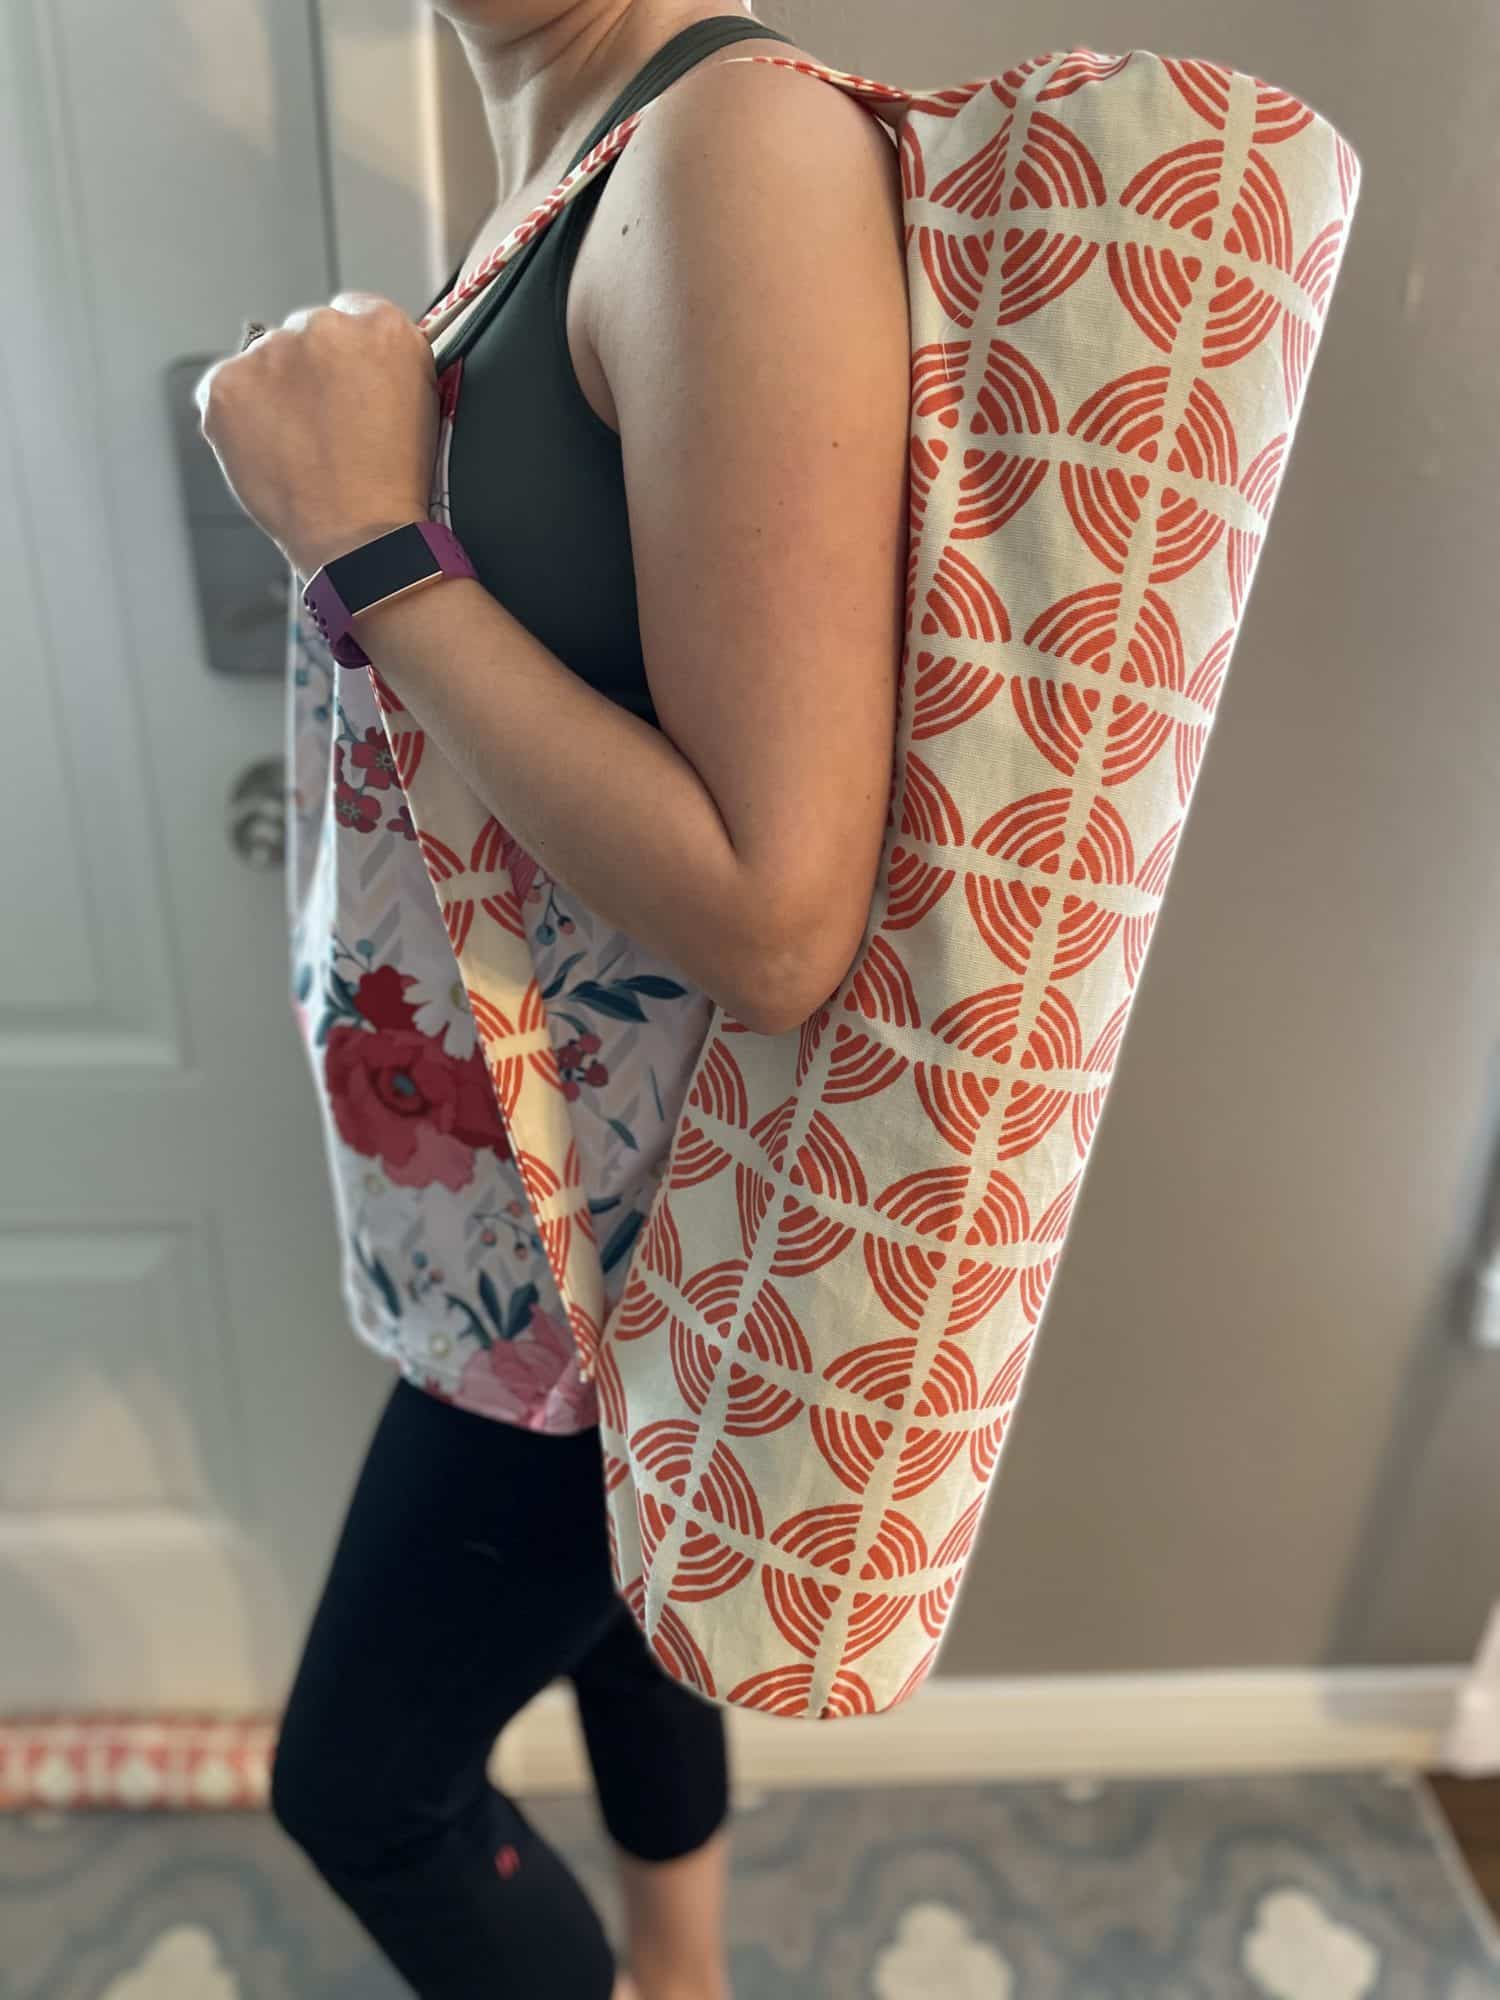 DIY Yoga Mat or Exercise Mat Bag - 5 out of 4 Patterns